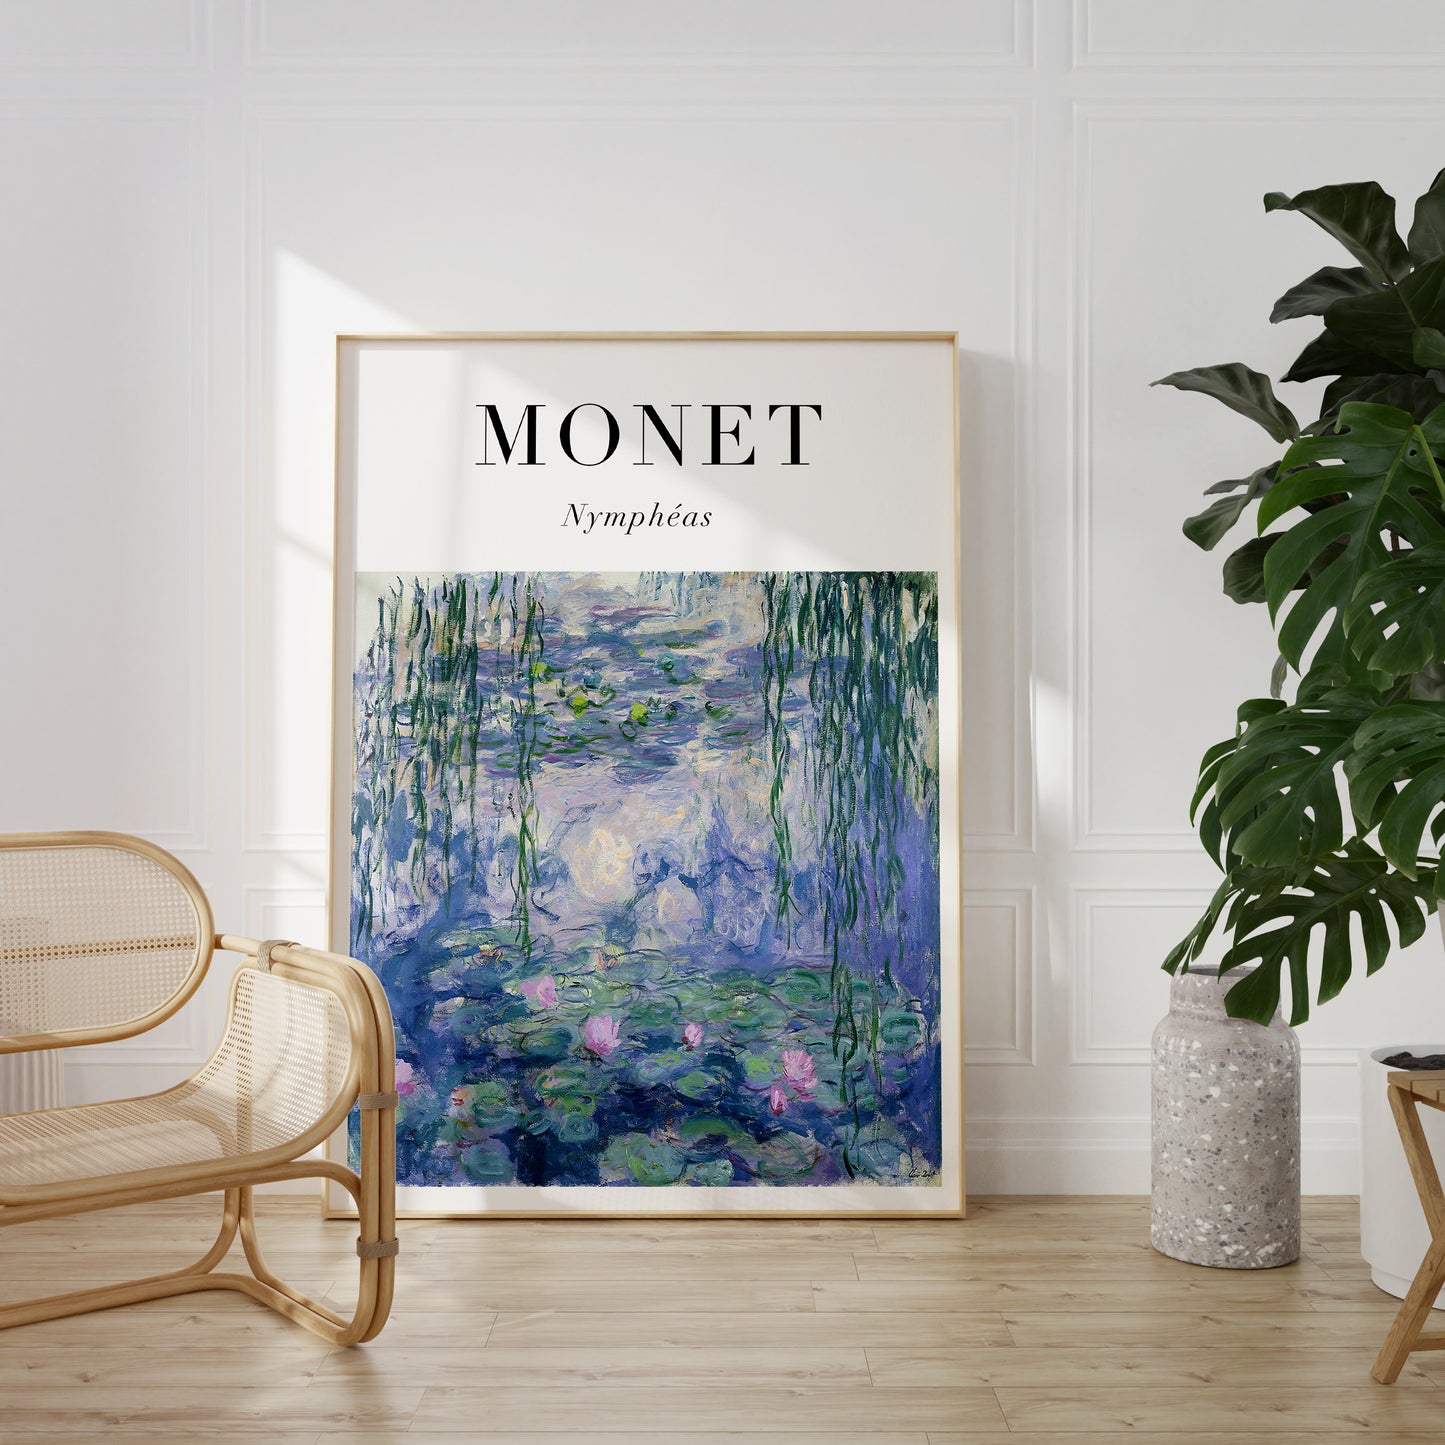 Monet Exhibition Style Poster Print